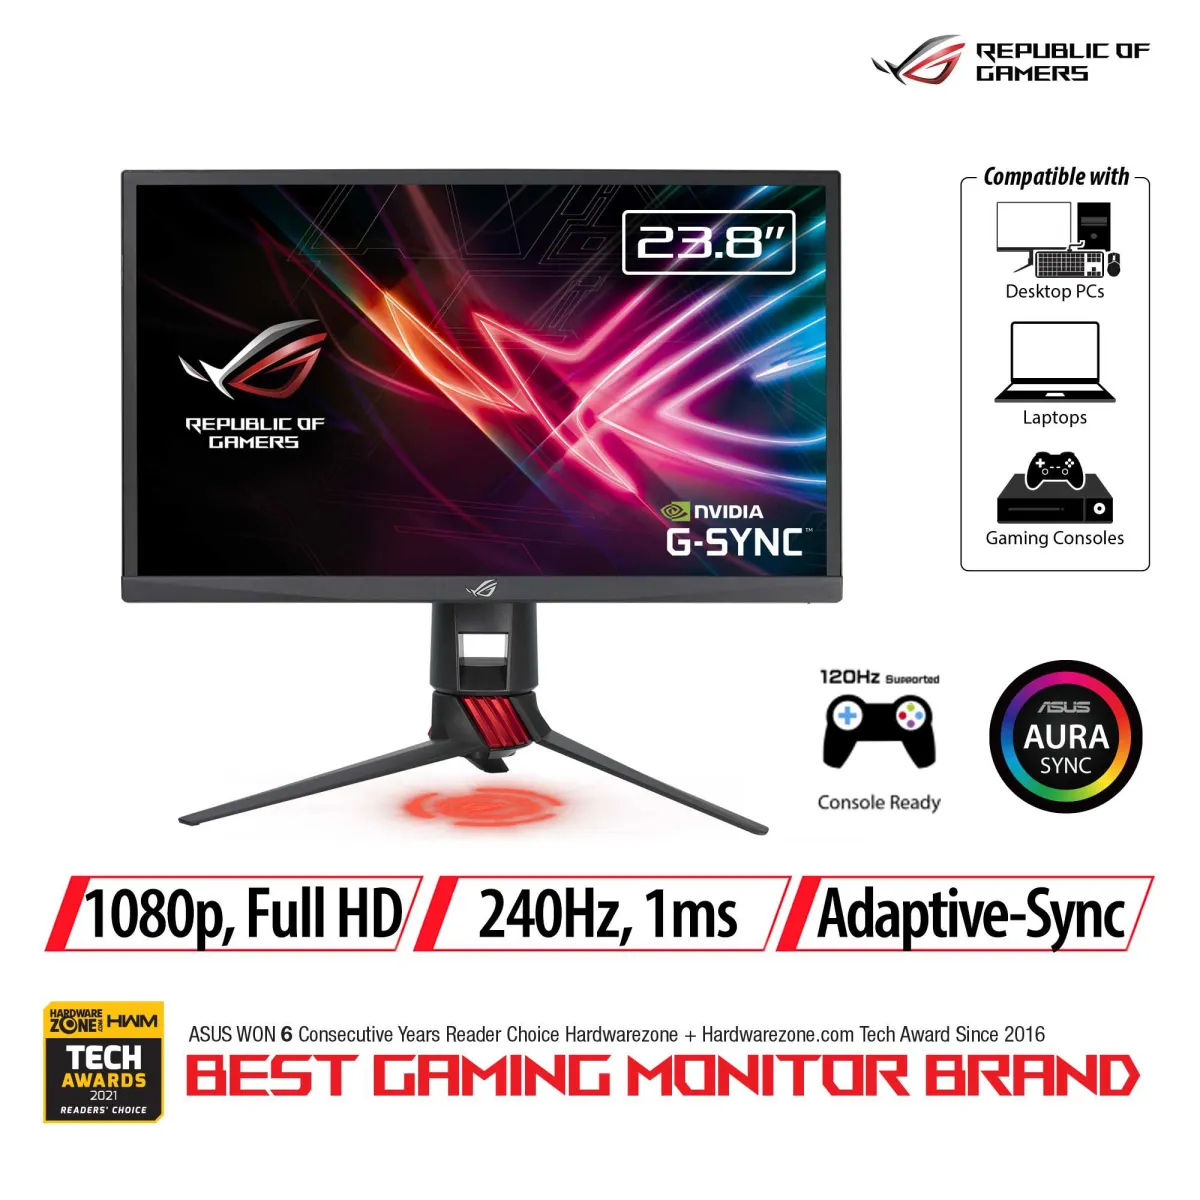 ASUS ROG Strix XG248Q Monitor 24 inch (23.8 inch viewable) FHD (1920x1080), Native 240Hz, 1ms, G-SYNC Compatible, Adaptive-Sync, Aura Sync | Lazada Singapore